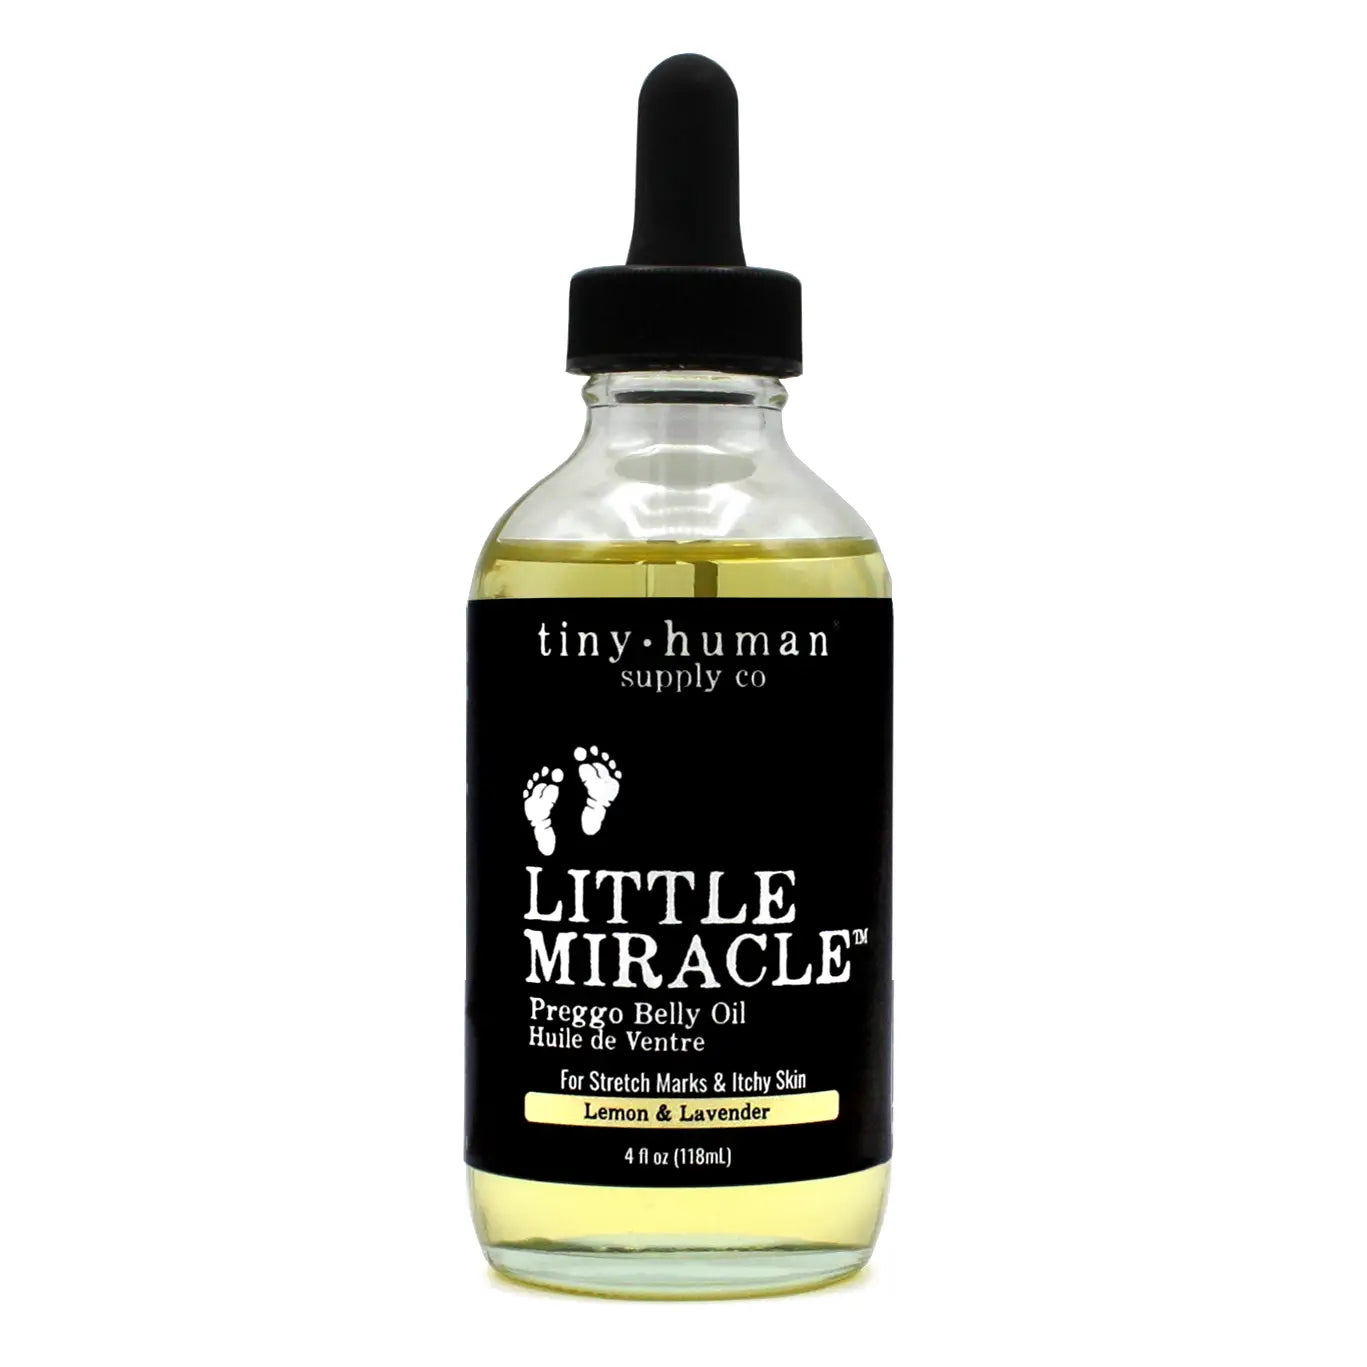 tiny human supply co. little miracle preggo belly oil lemon lavender